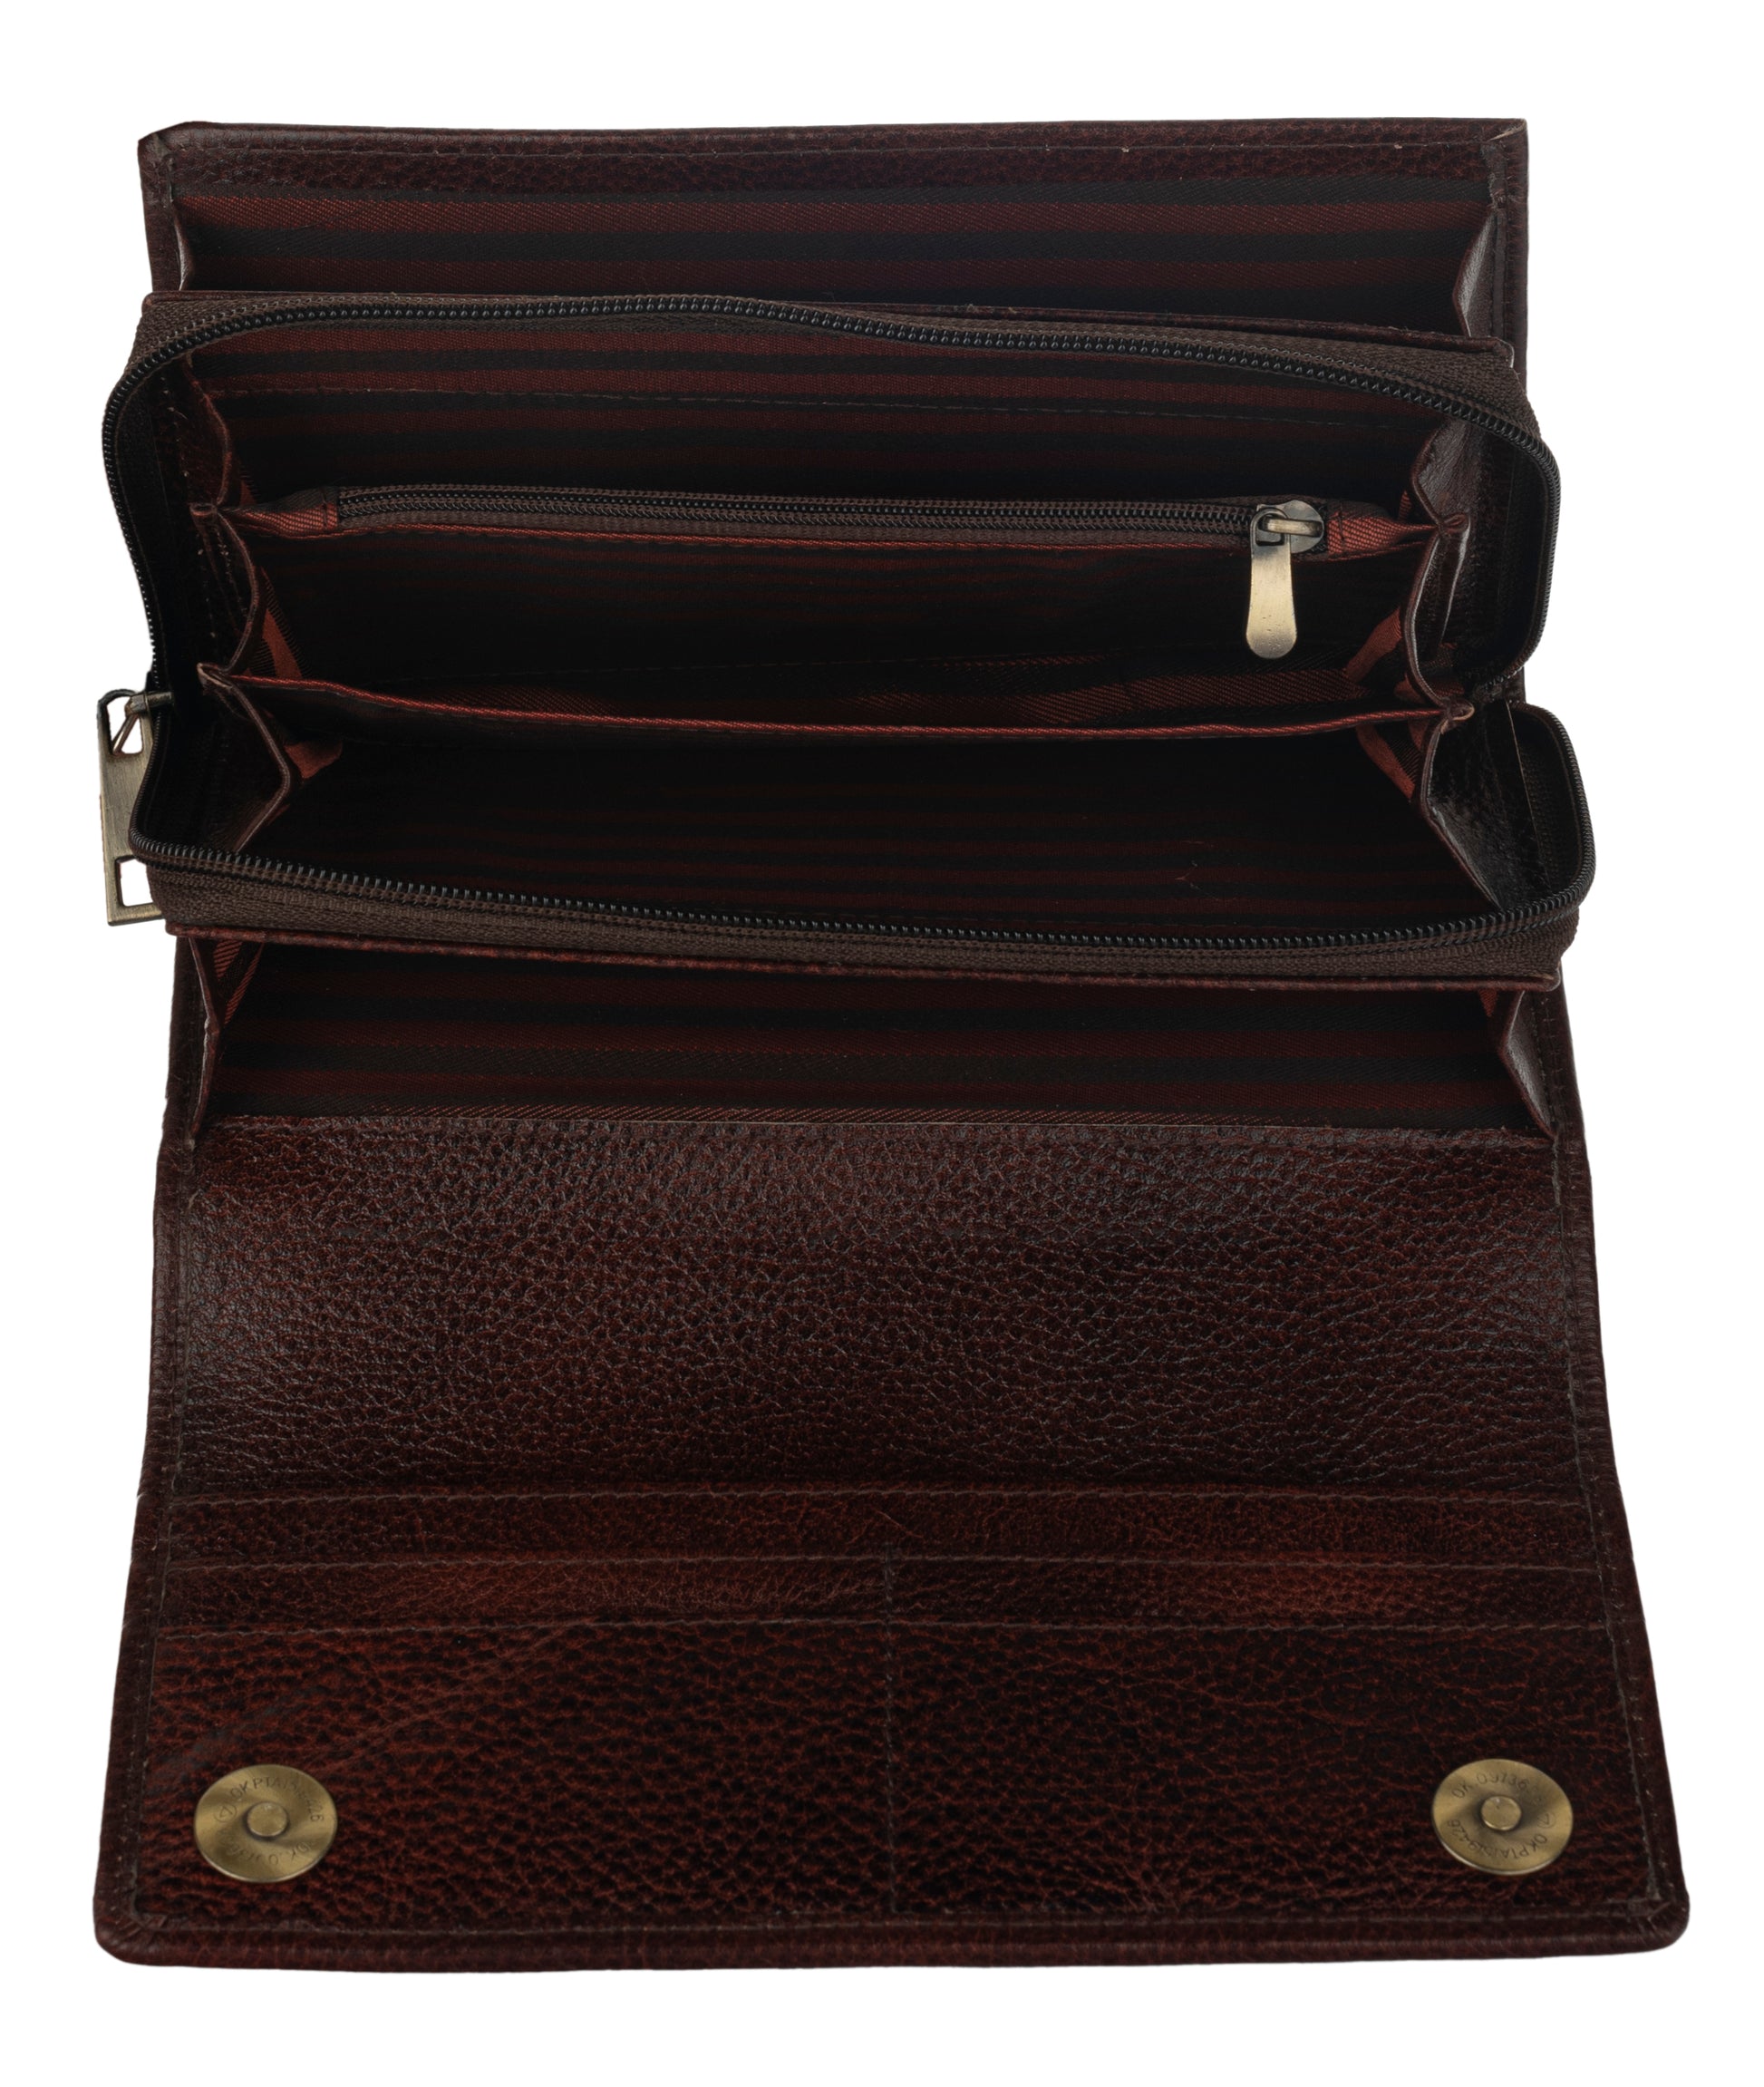 shantiniketan-pure-leather-brown-clutch-handbag-7-5-4-for-women